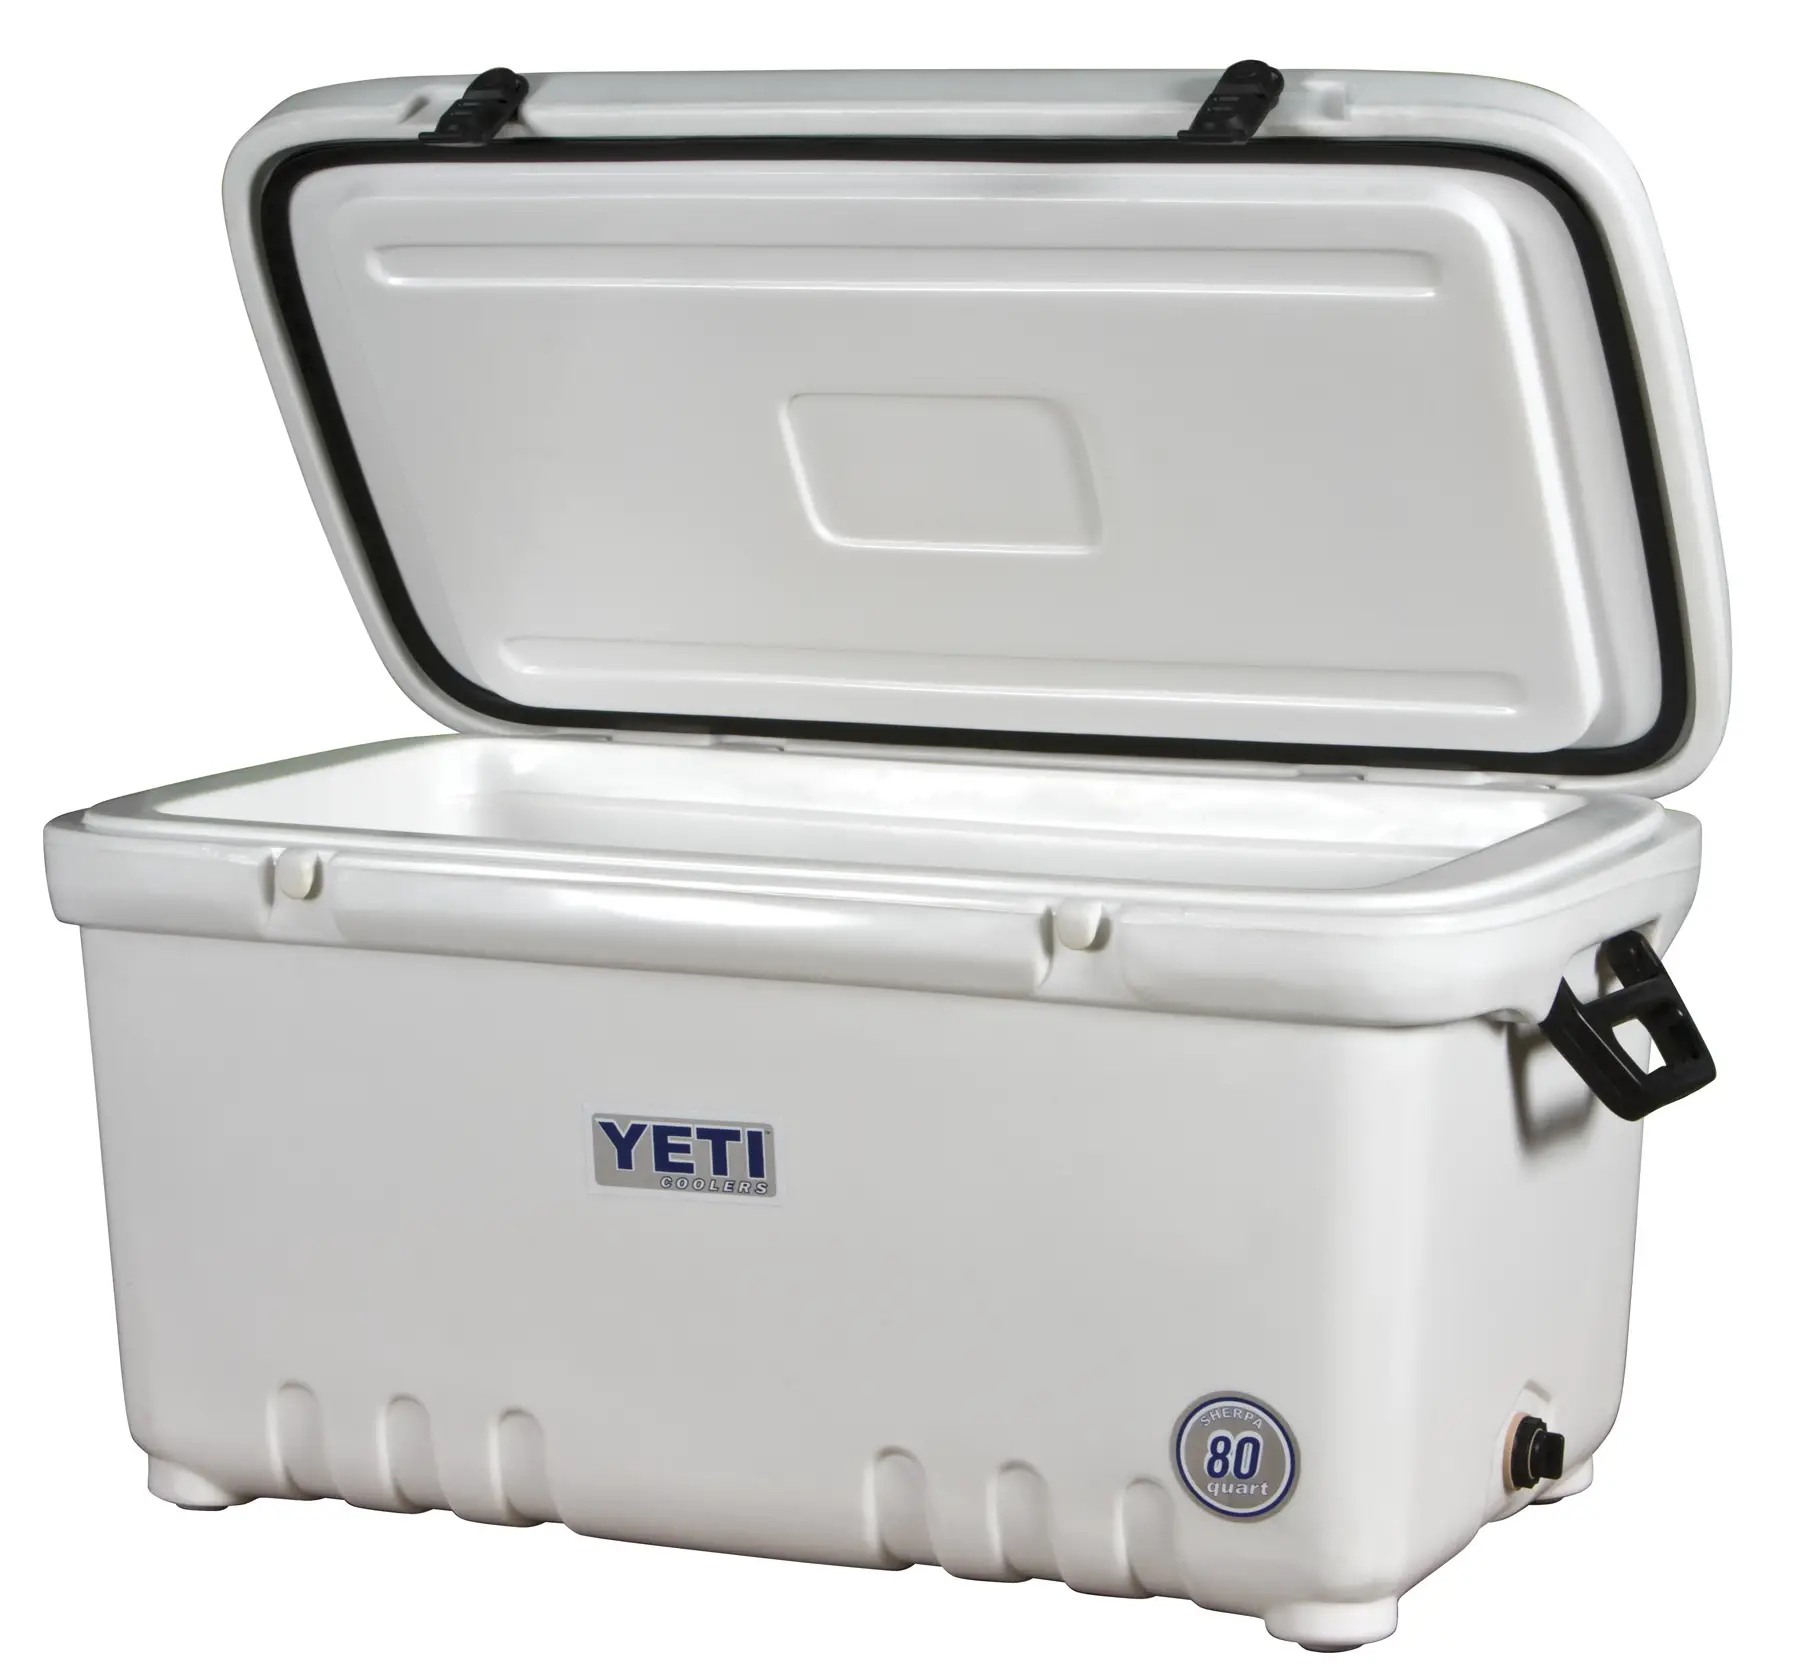 yeti-sherpa-80-quart-2007 - The Cooler Box